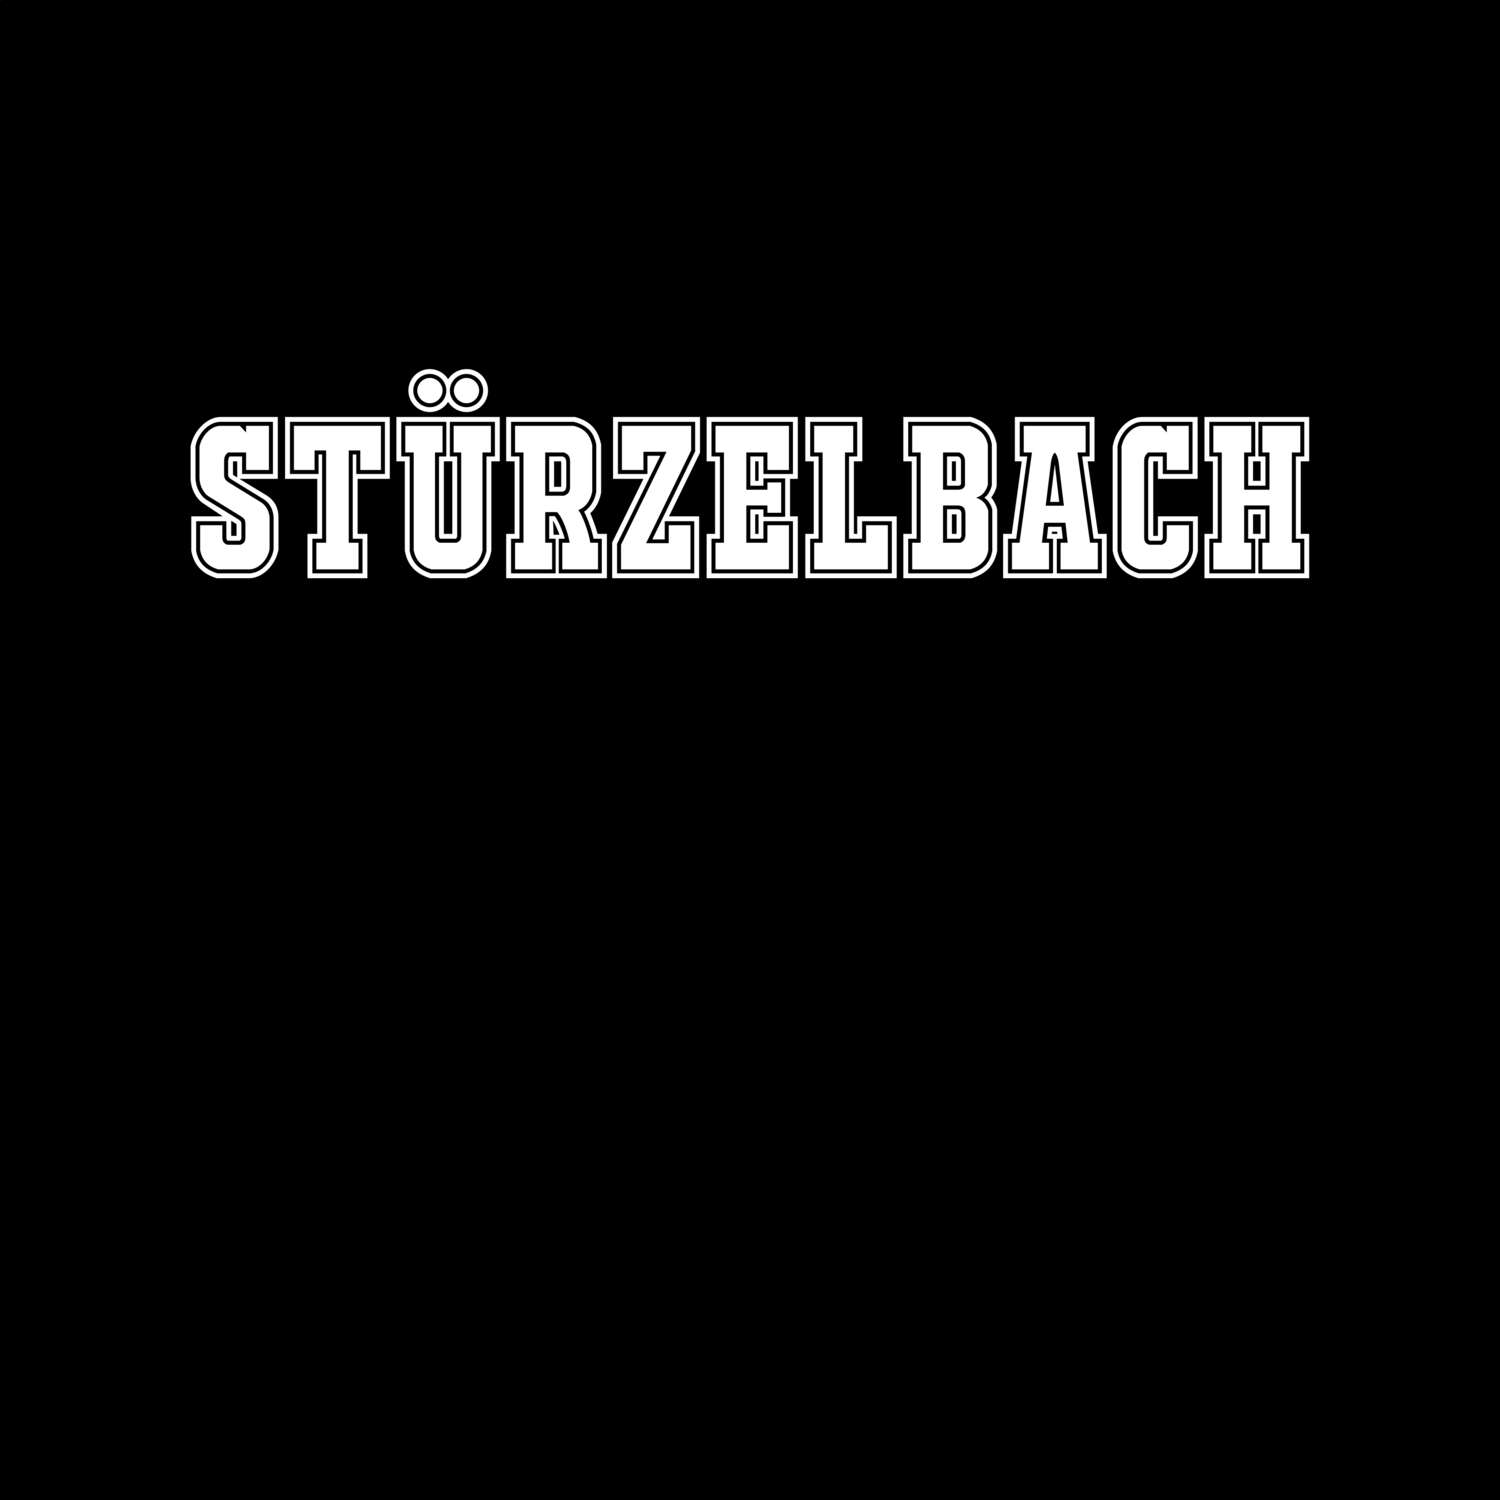 Stürzelbach T-Shirt »Classic«